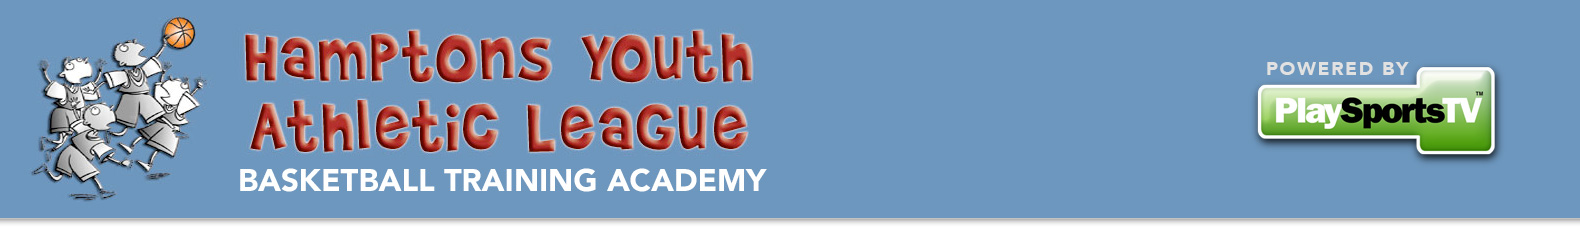 Hampton Youth Athletic League Training Academy